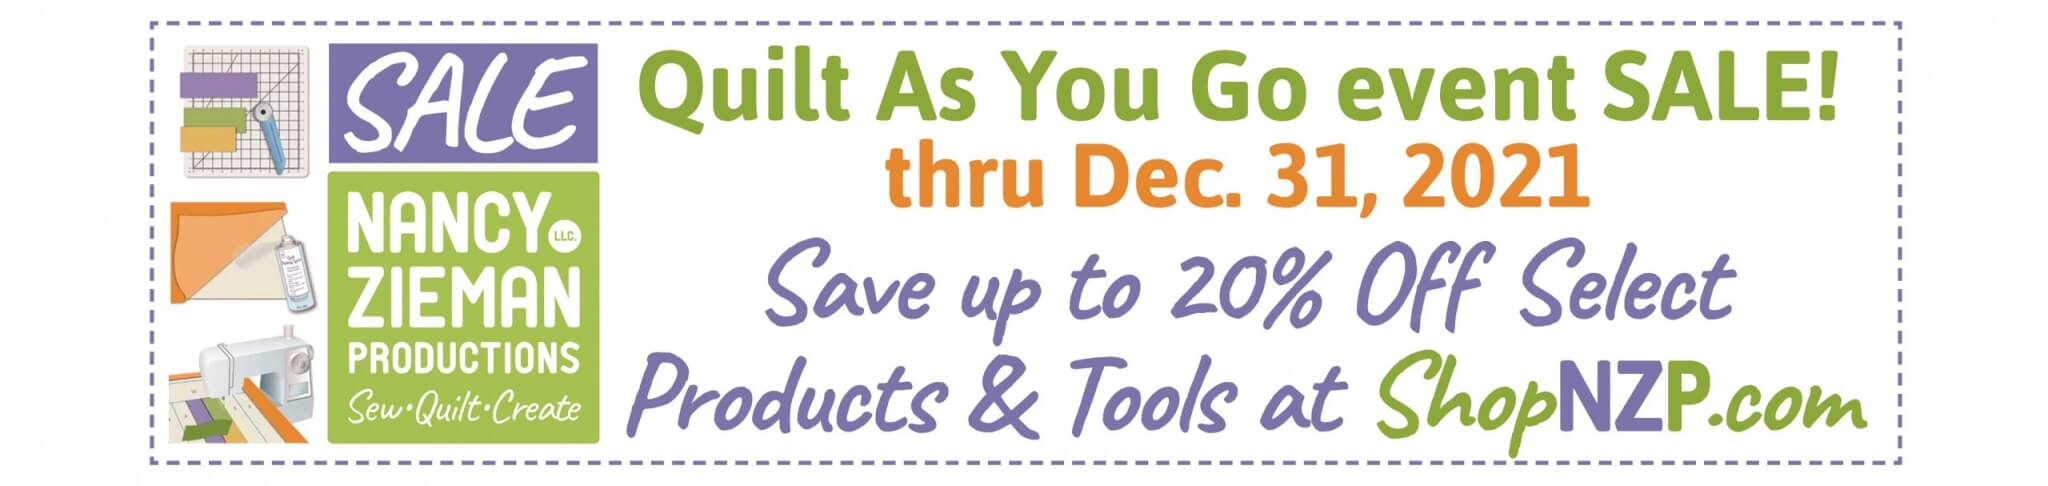 Quilt As You Go event SALE thru December 31, 2021 at Nancy Zieman Productions at ShopNZP.com